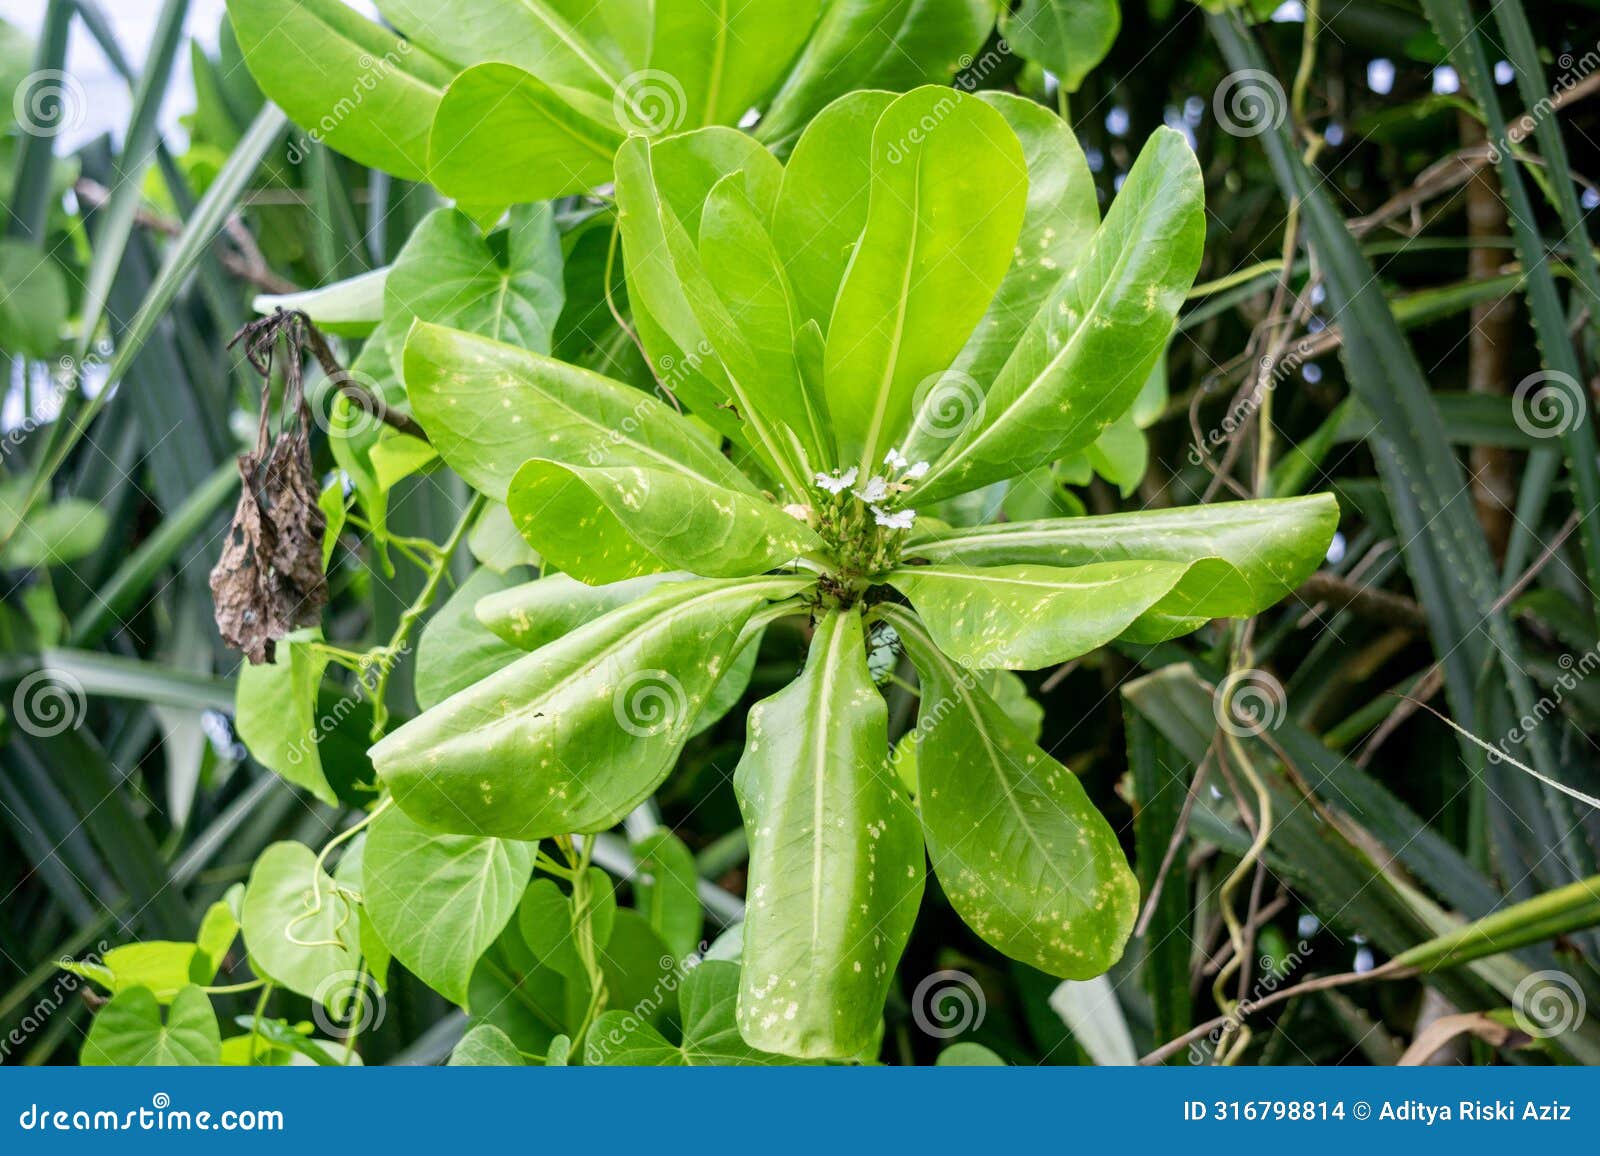 scaevola taccada (gagabusan, kayu gabus, bunga separuh, beach cabbage, sea lettuce, or beach naupaka)